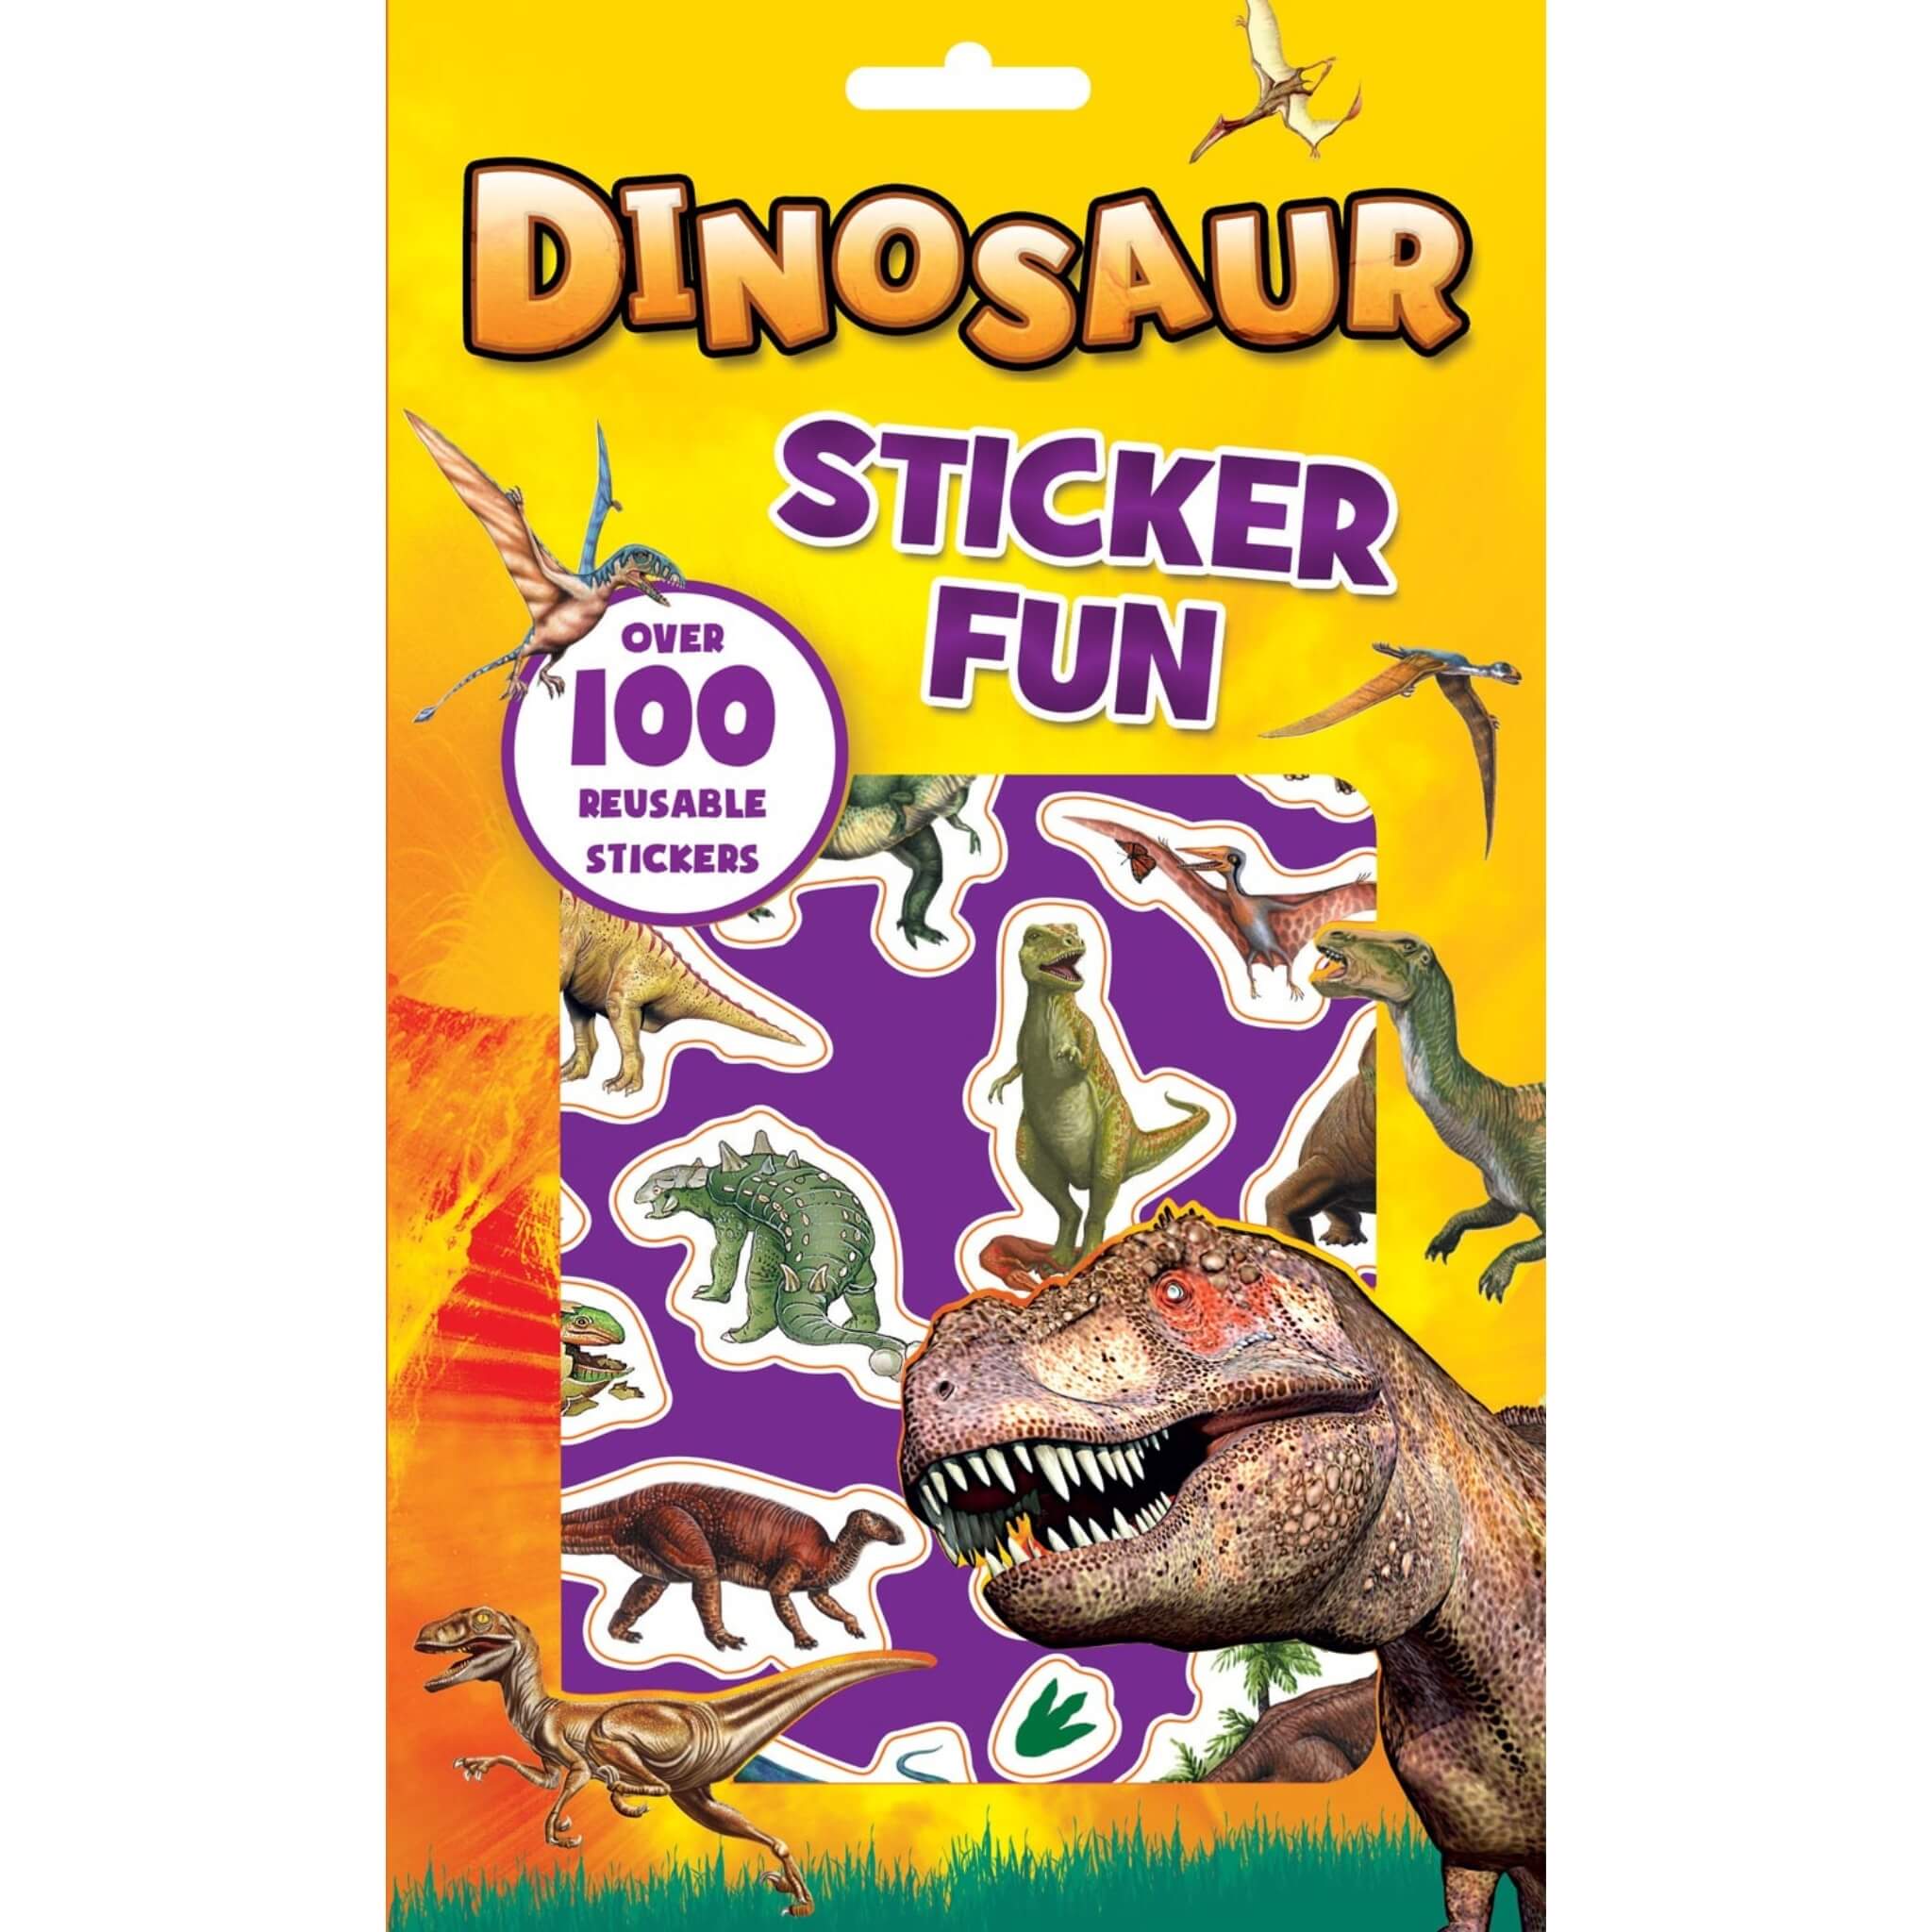 Dinosaur-Sticker-Fun